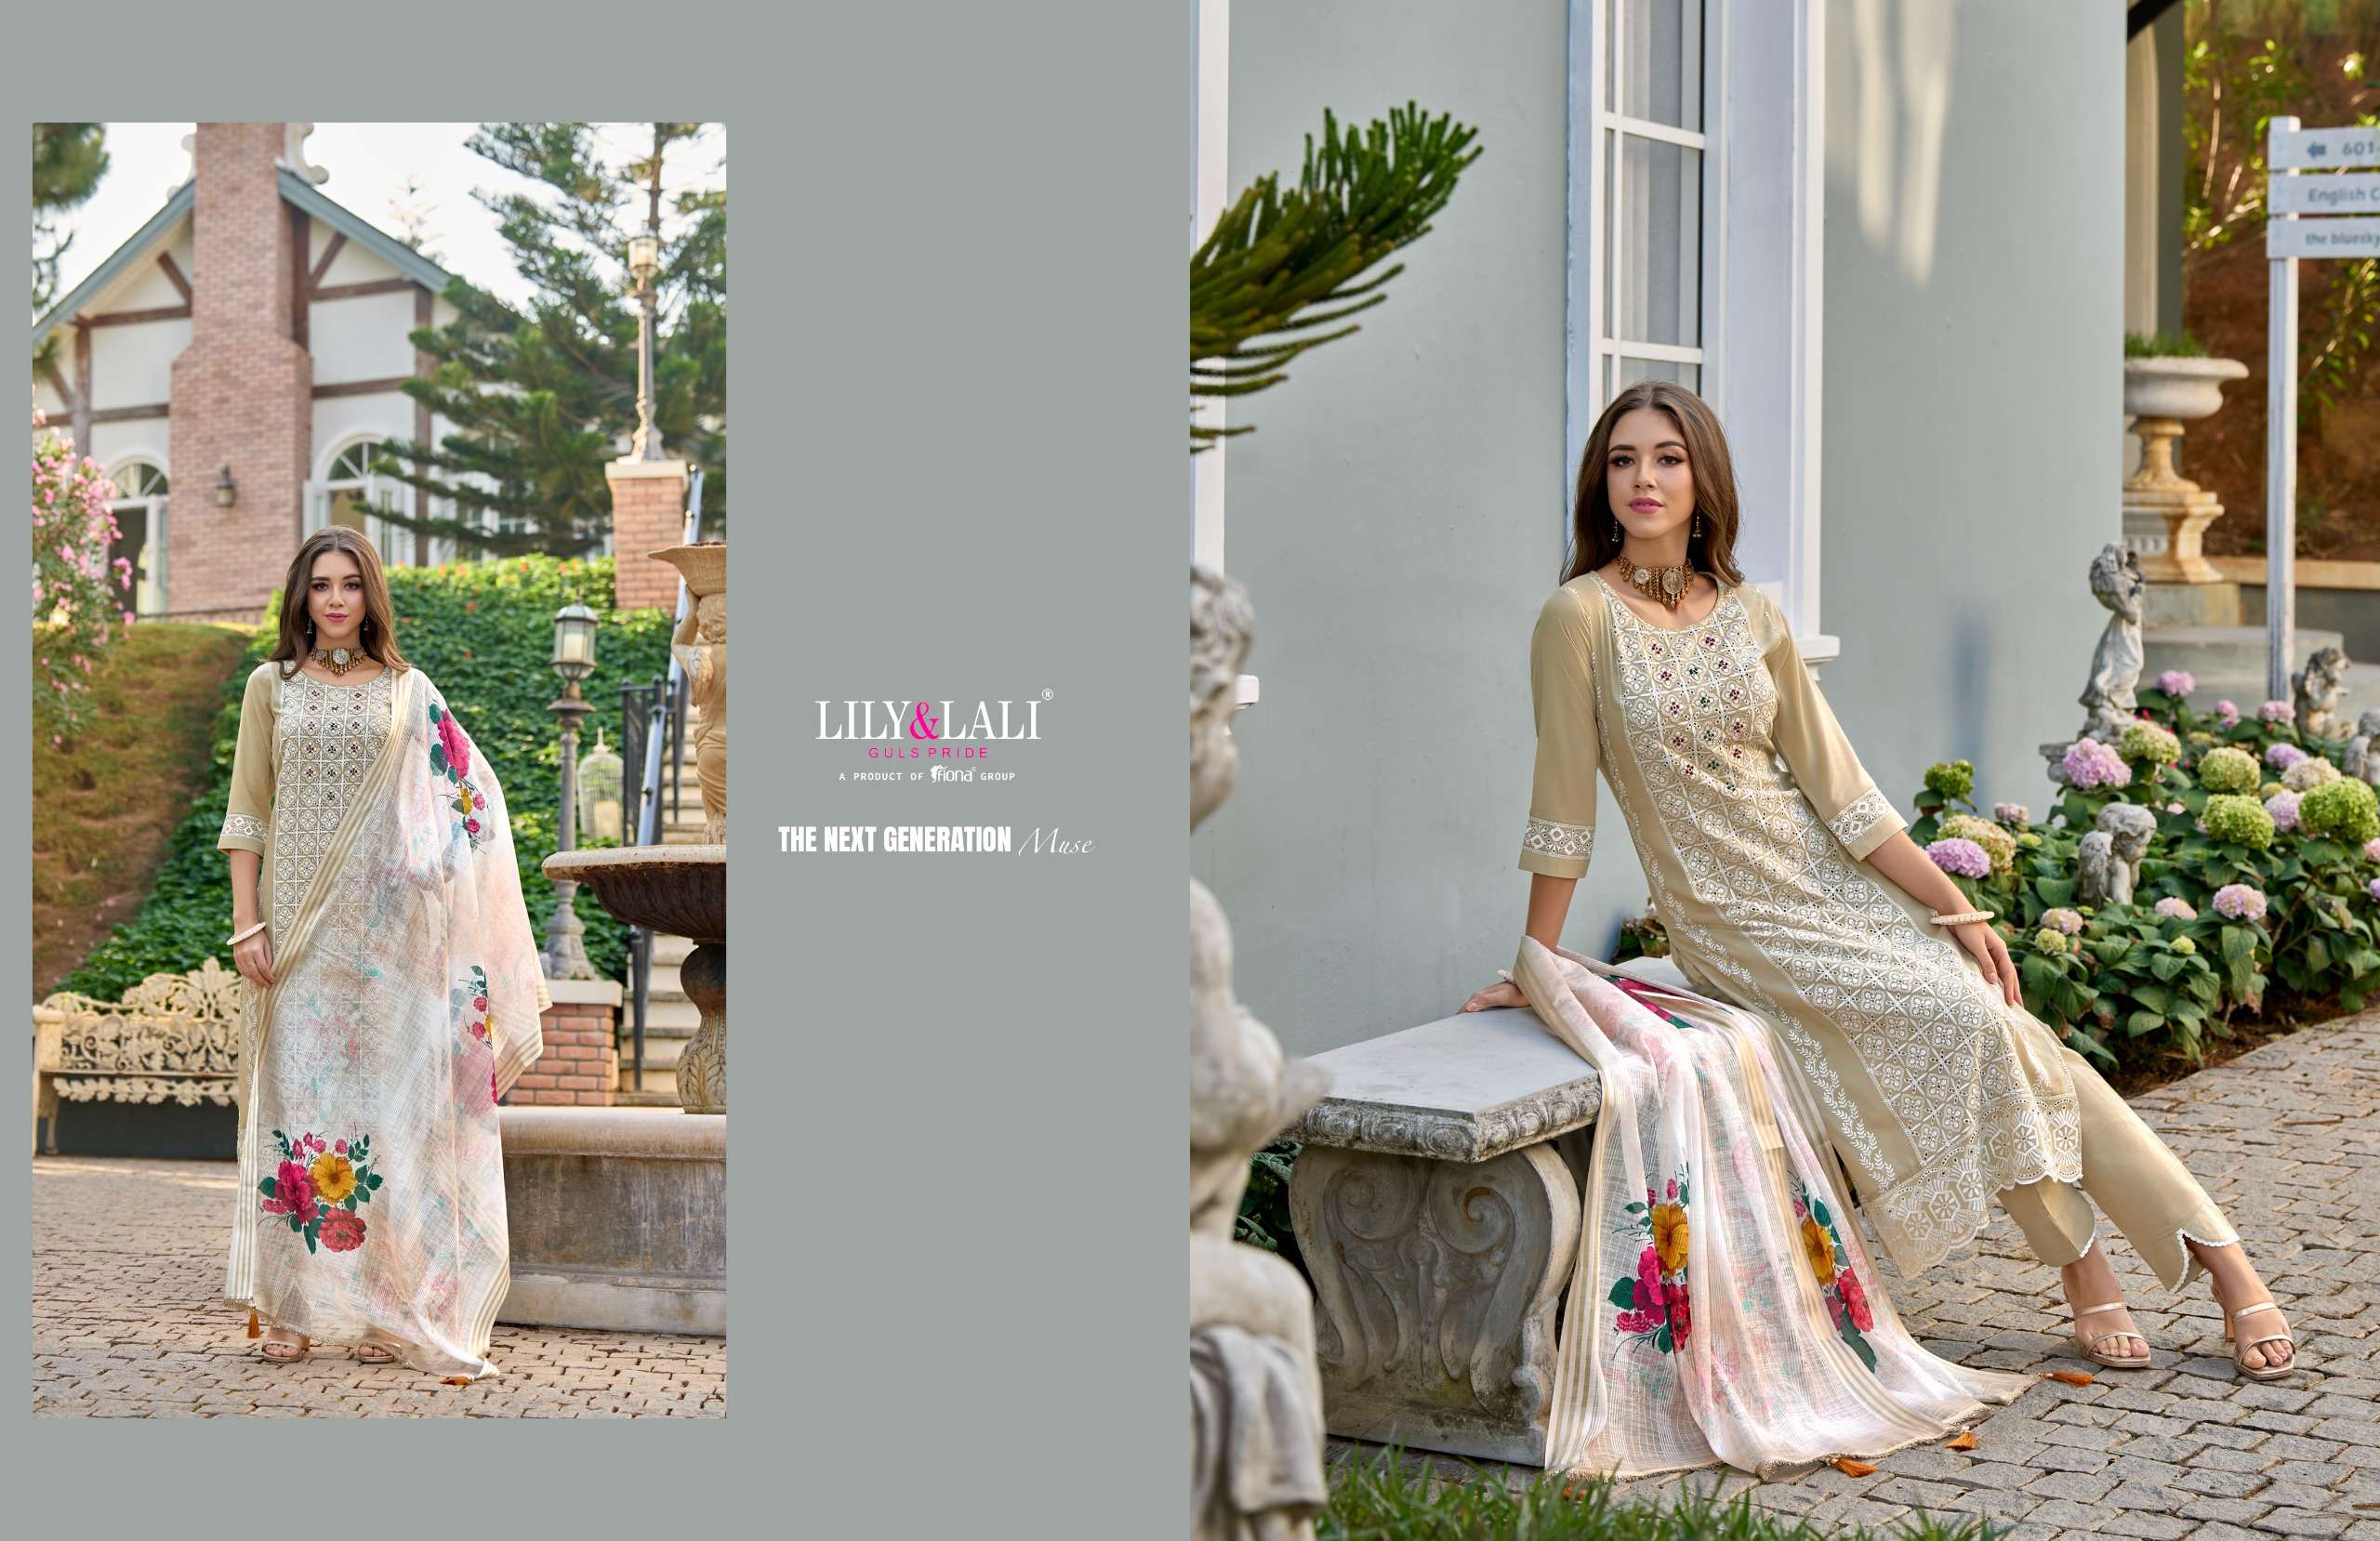 lily and lali cotton carnival viscose look kurti  pant with dupatta catalog